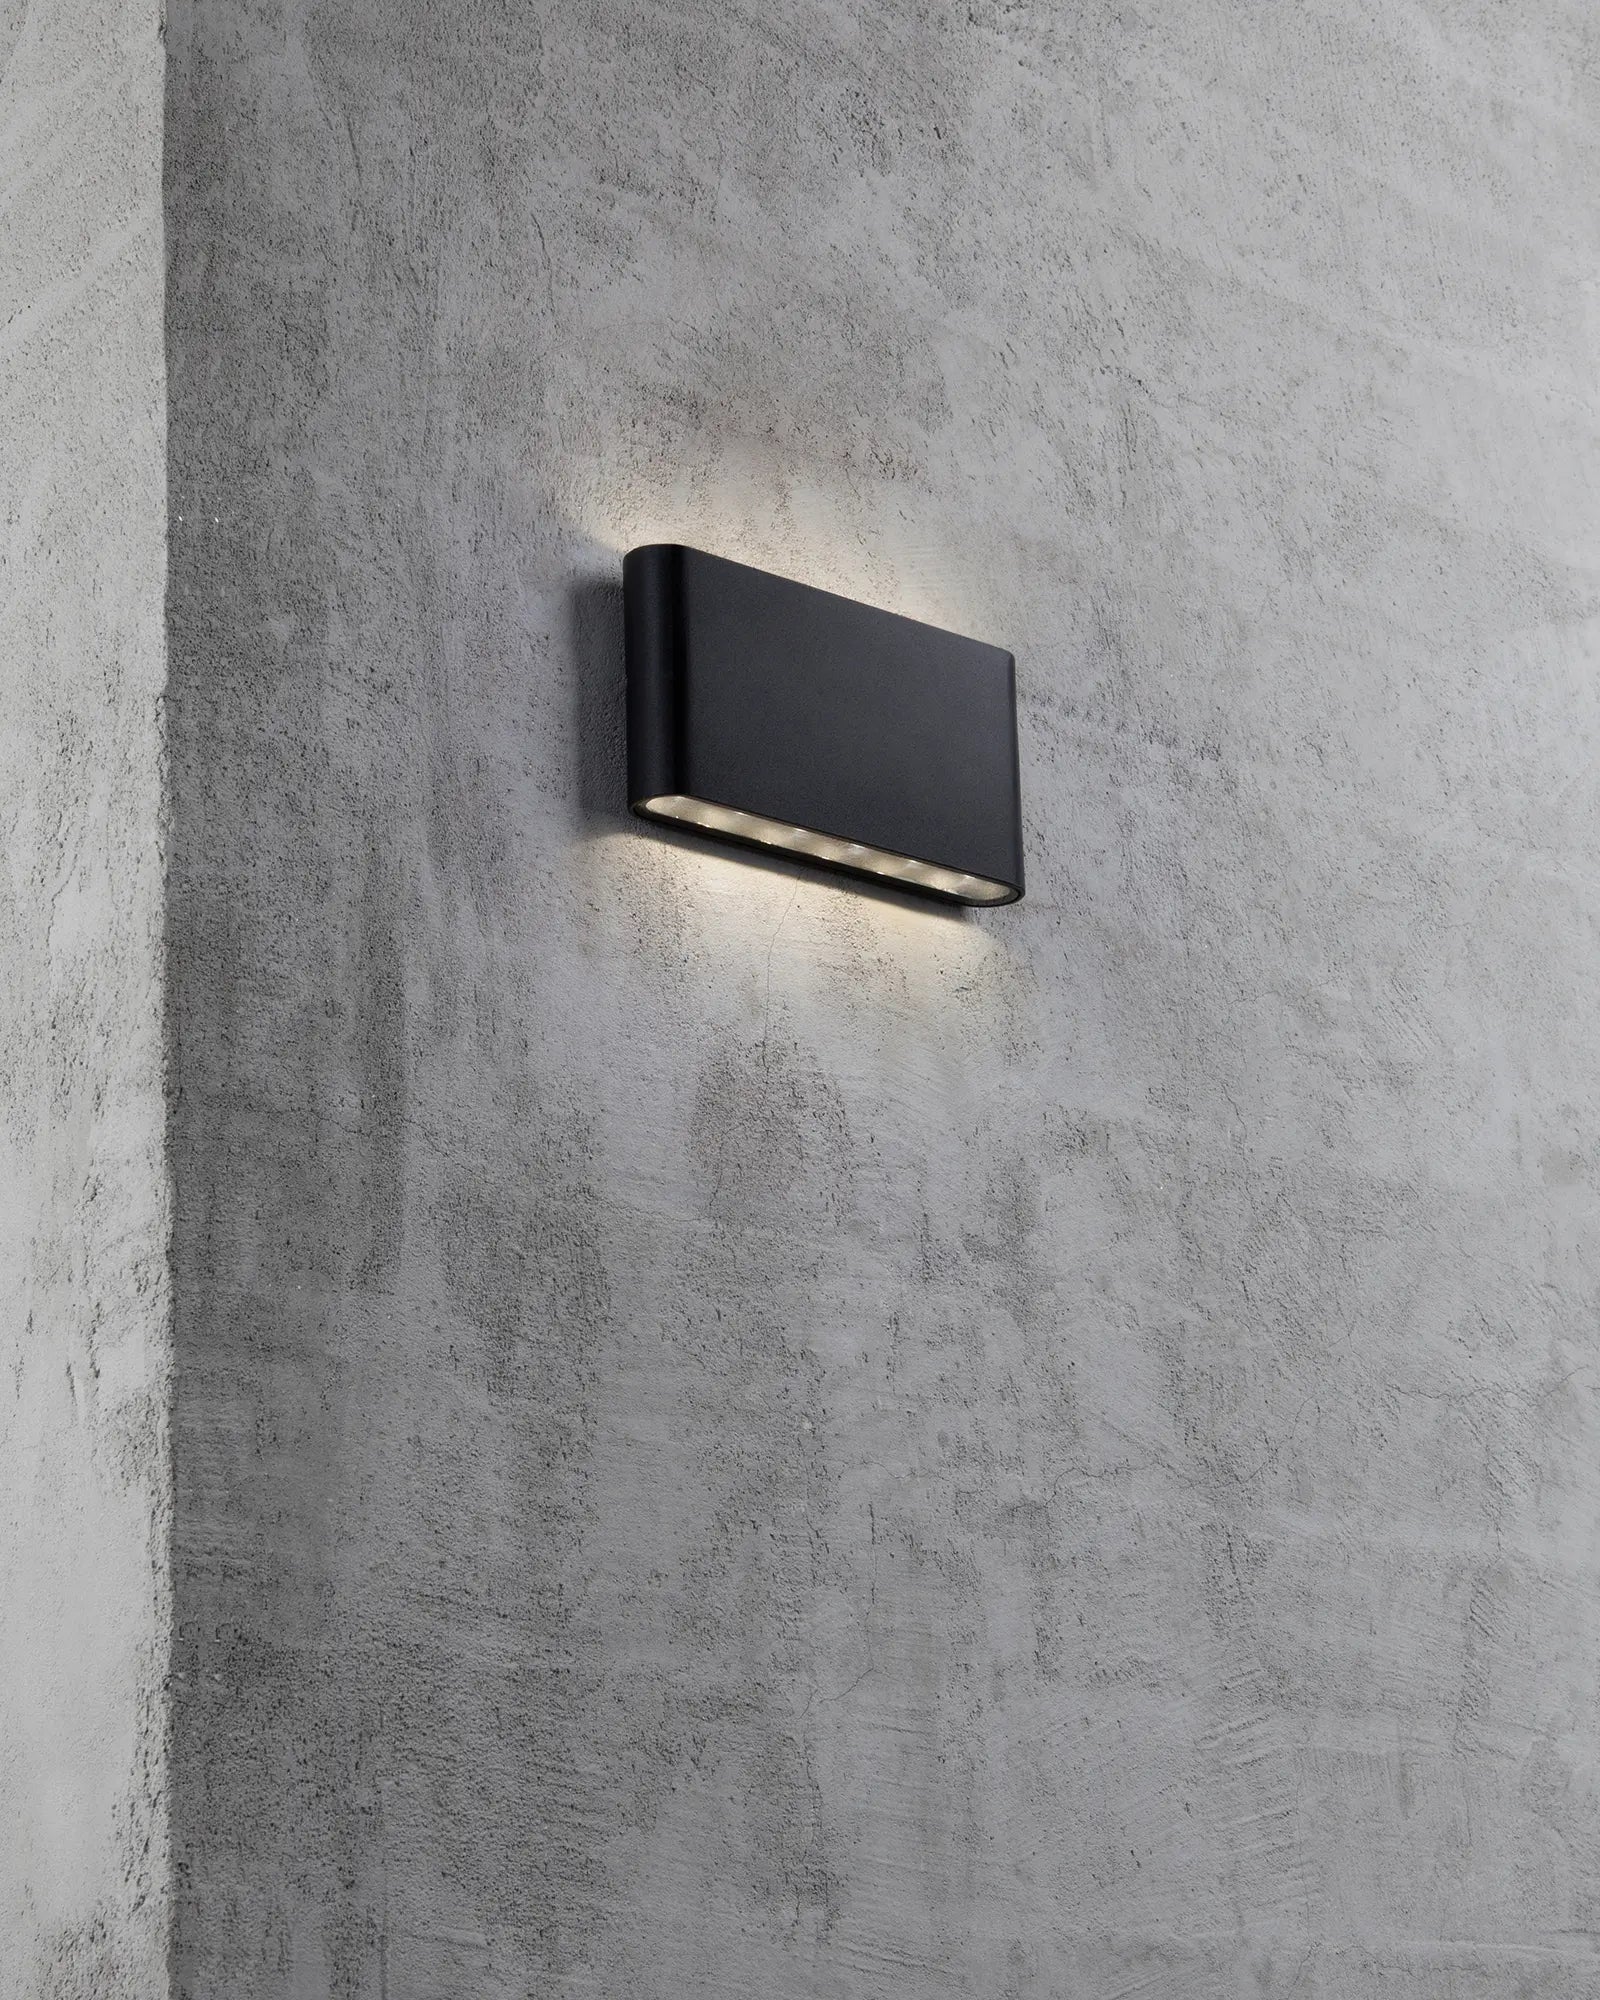 Kinver minimal Scandinavian outdoor wall light black on concrete wall